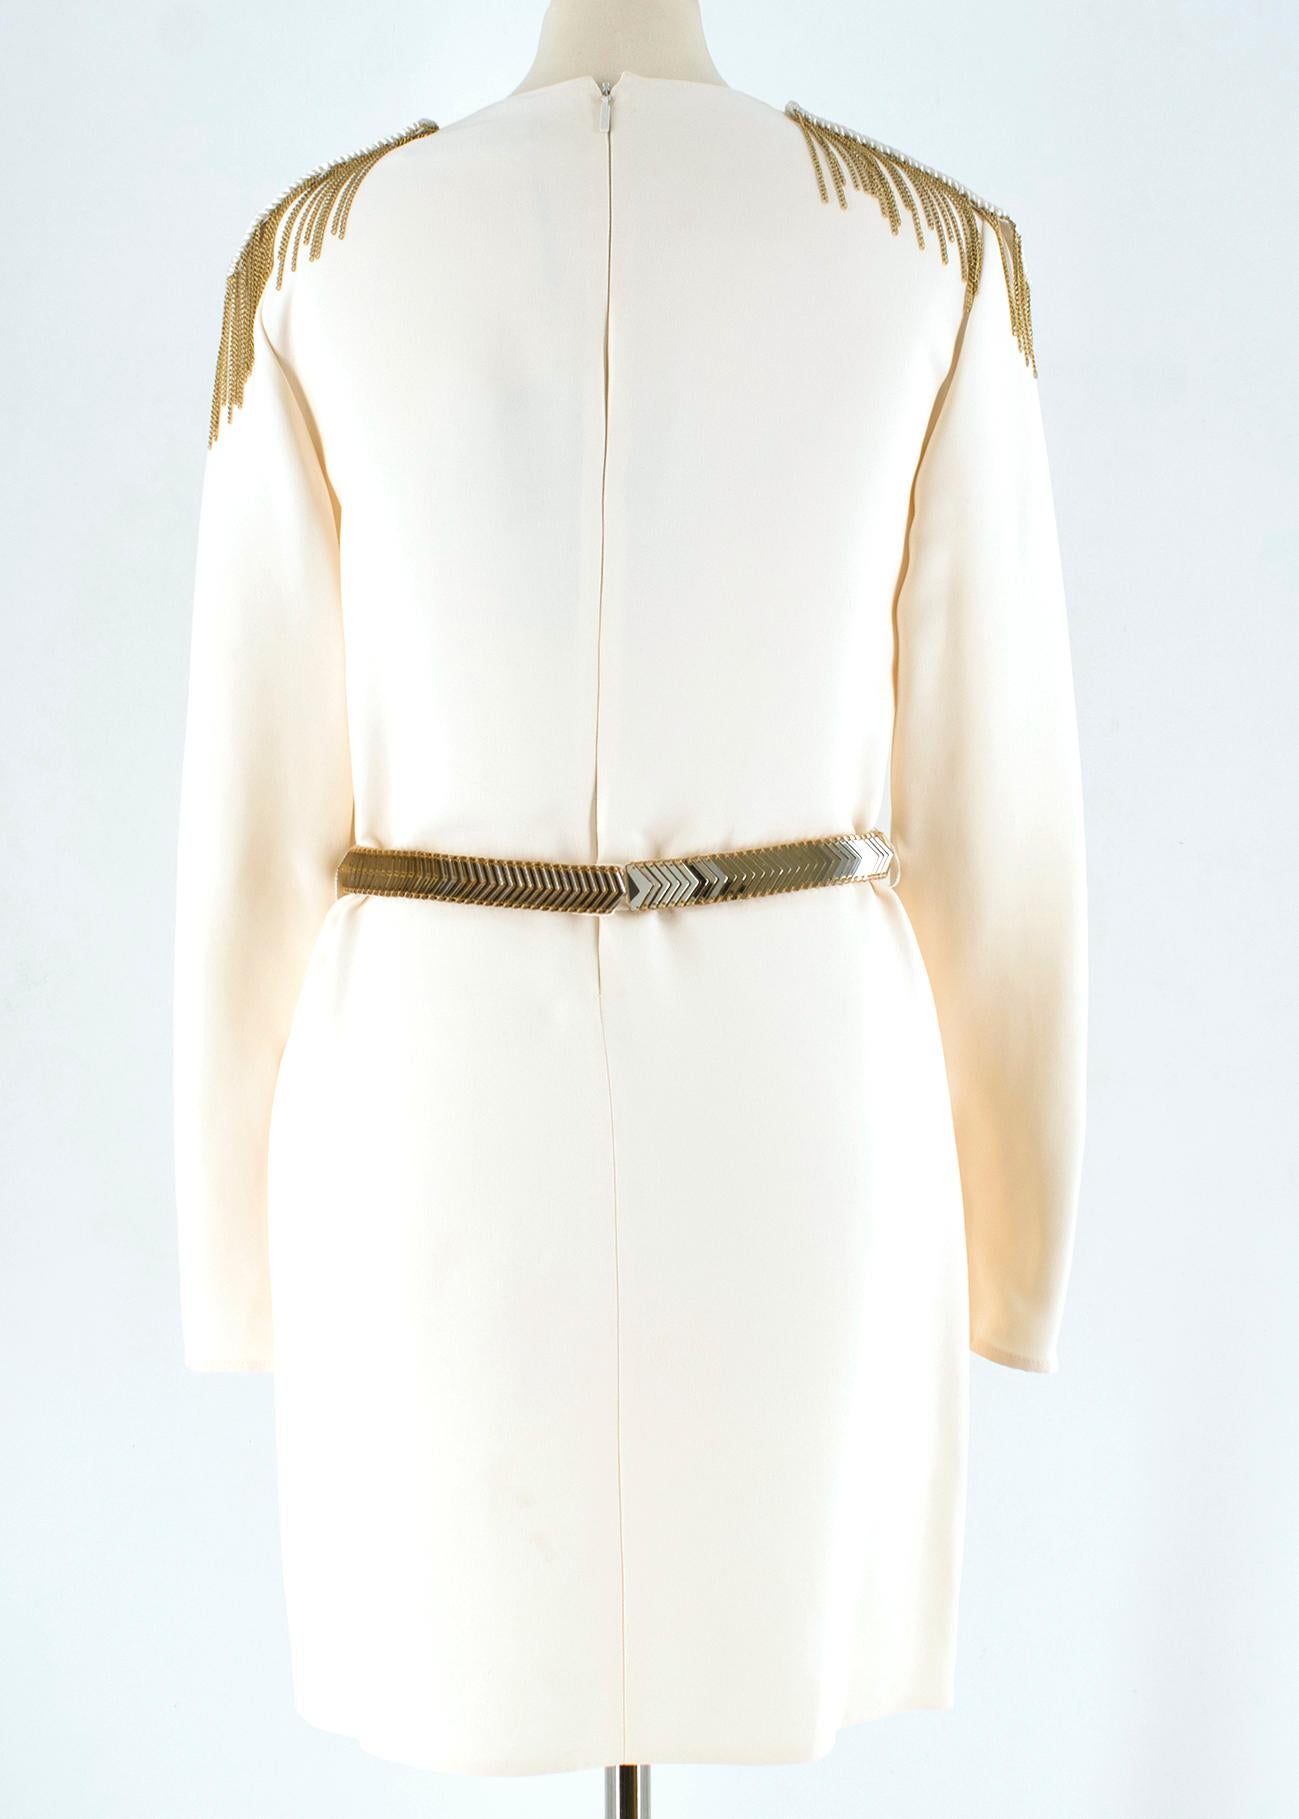 White Versace Cream Mini Dress with Crystal Embellished Shoulders & Belt - Size US 4